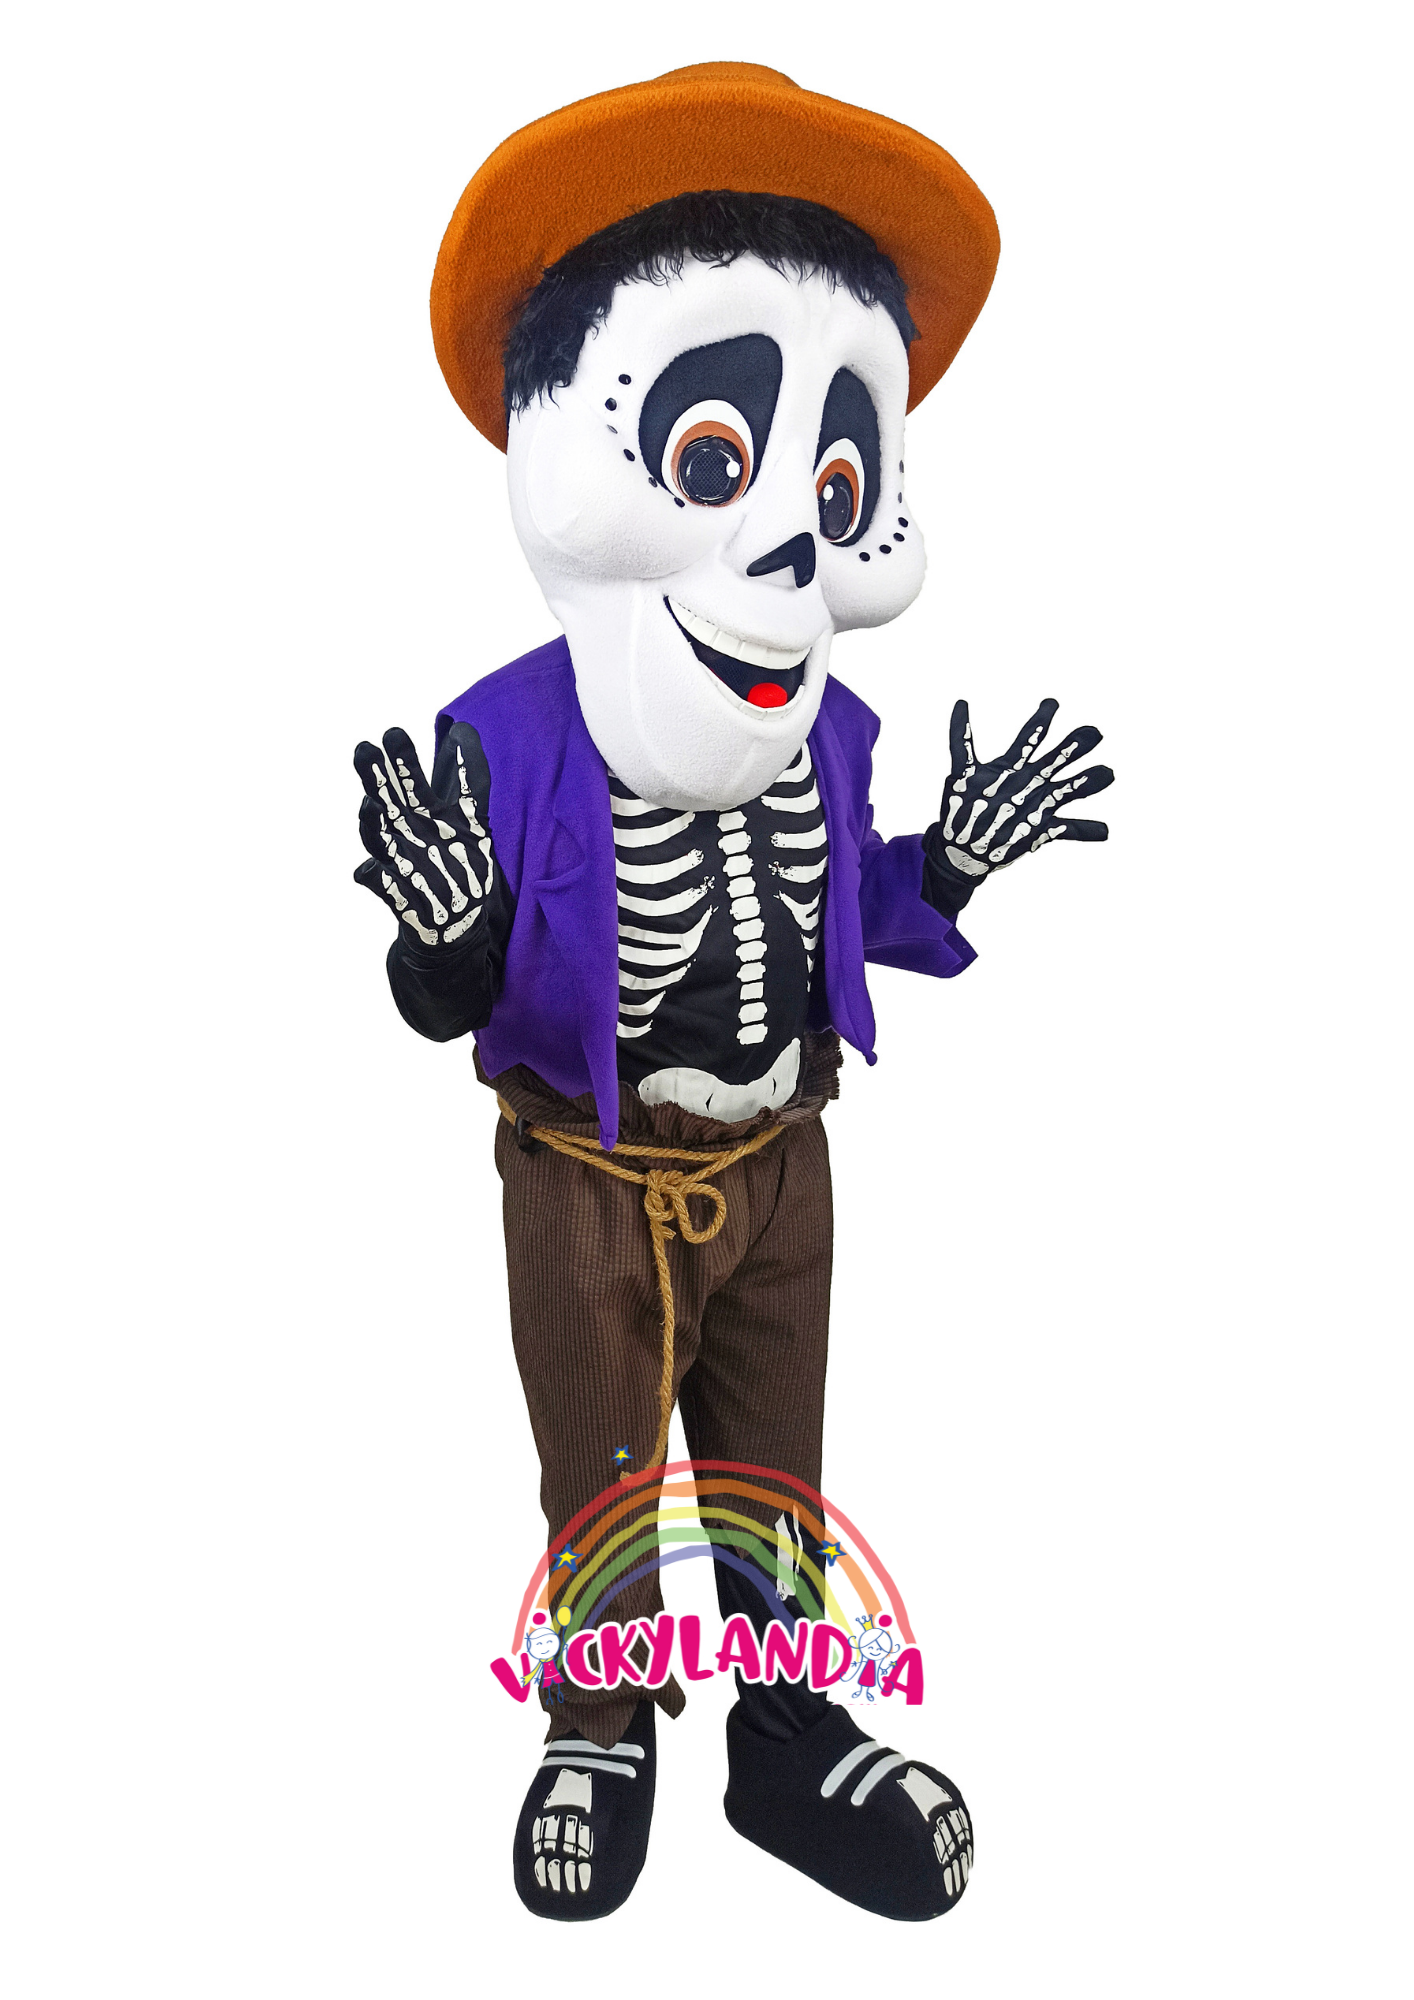 hombre esqueleto hallowen disfraz muñeco cabezon cabezudo botarga mascota publicitaria Peluches personalizados Merchandising corporativos  personalizados fabricante vickylandia